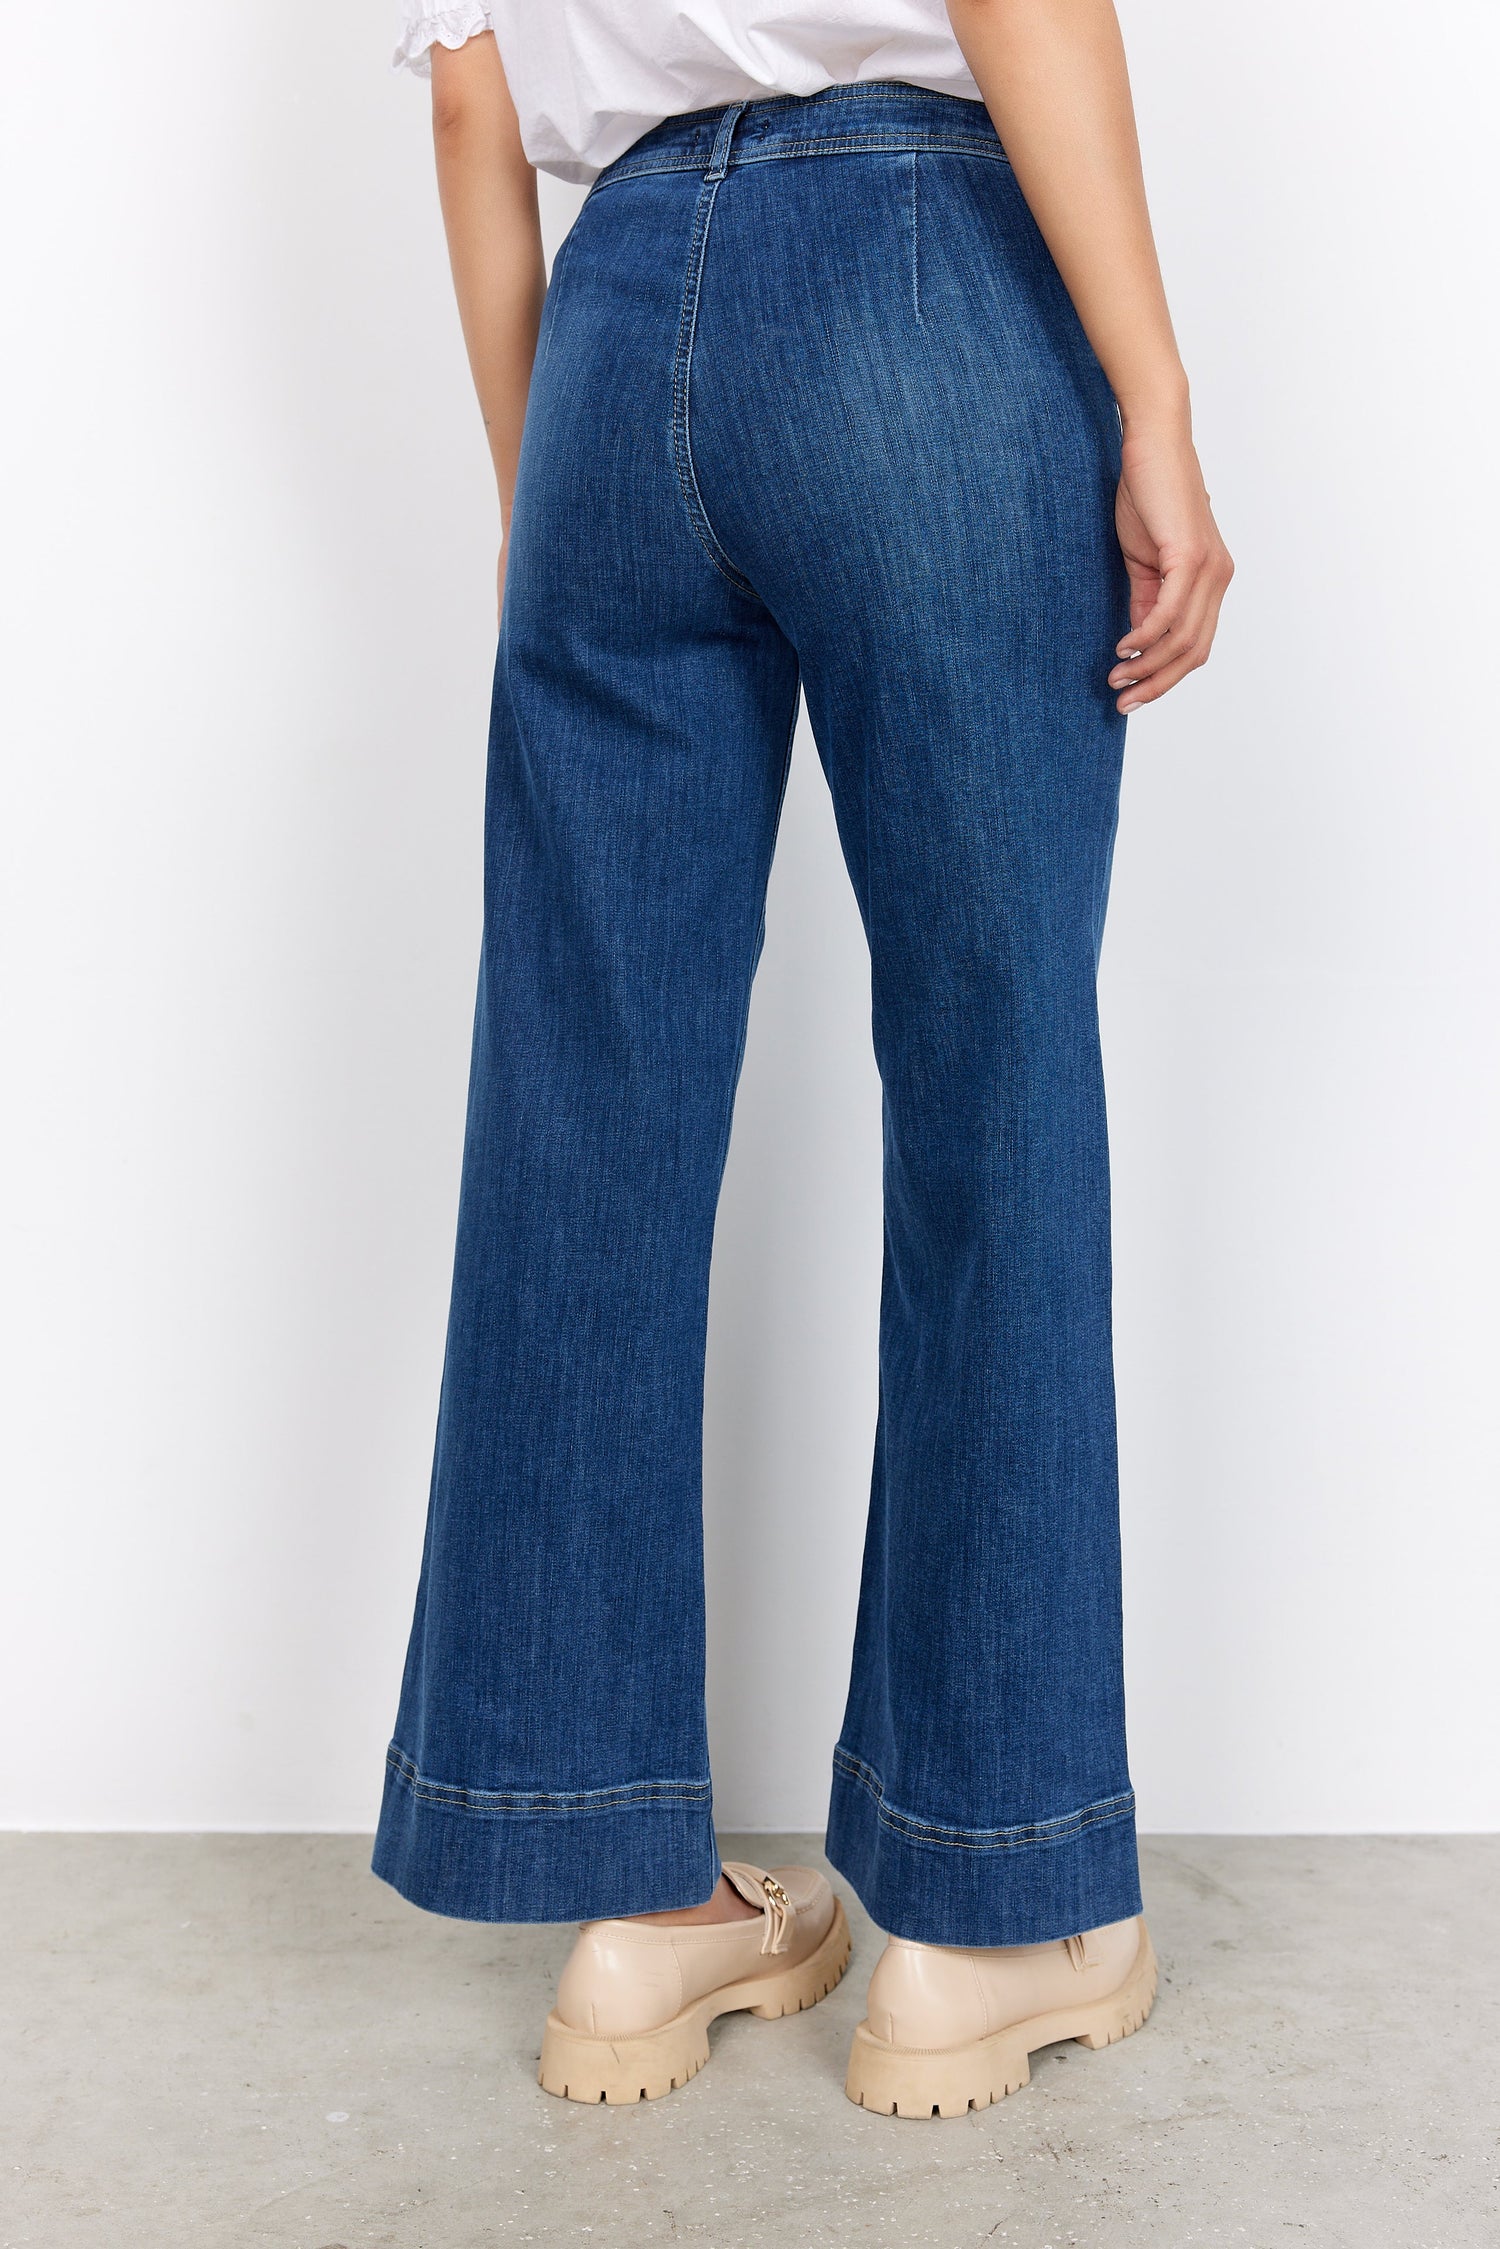 Kimberley Jeans